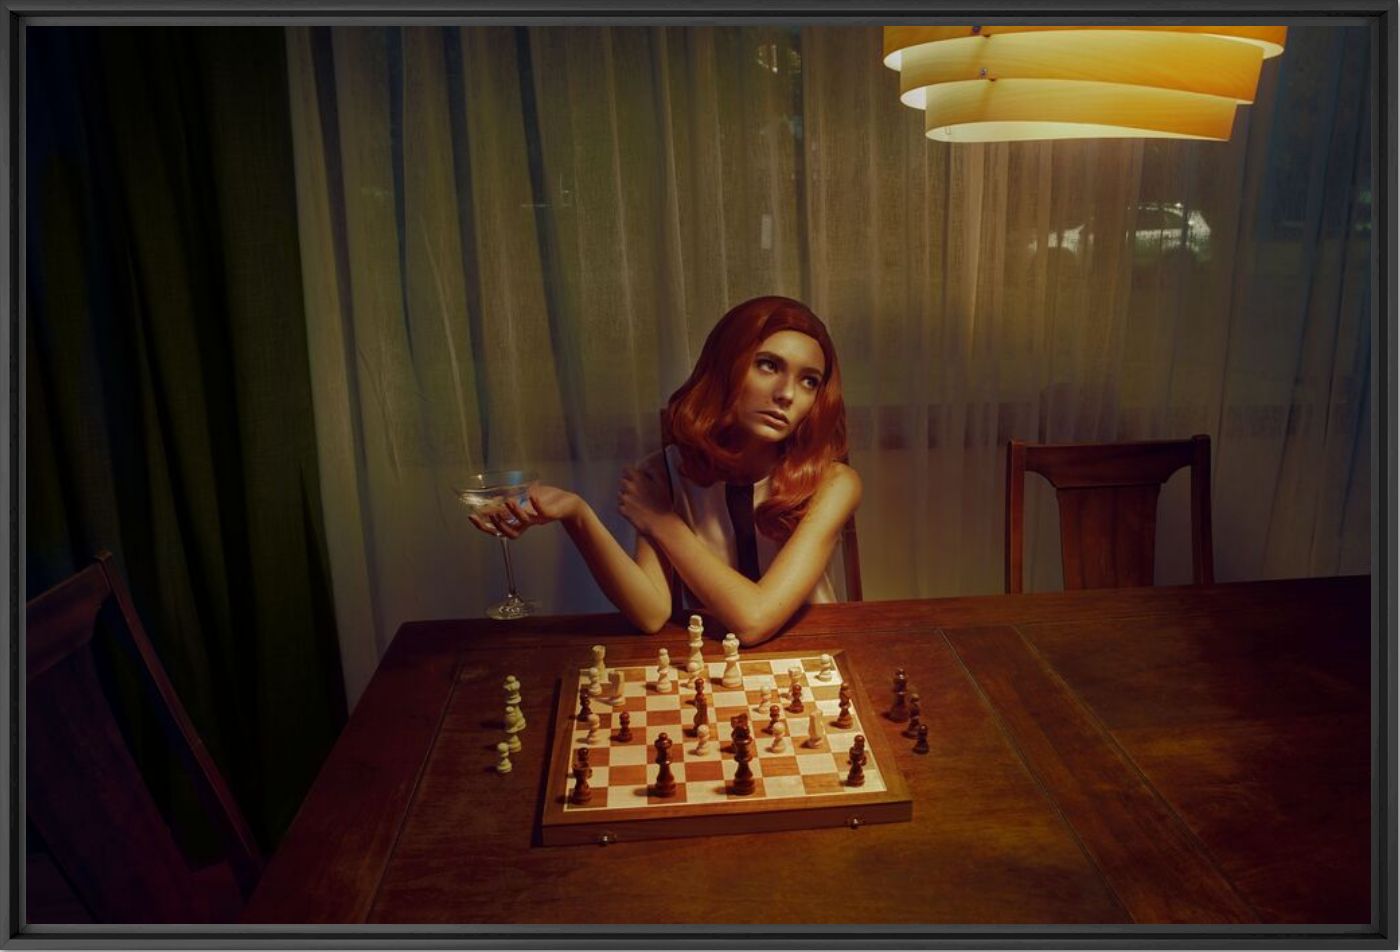 Fotografia Checkmate - Kate Woodman - Pittura di immagini